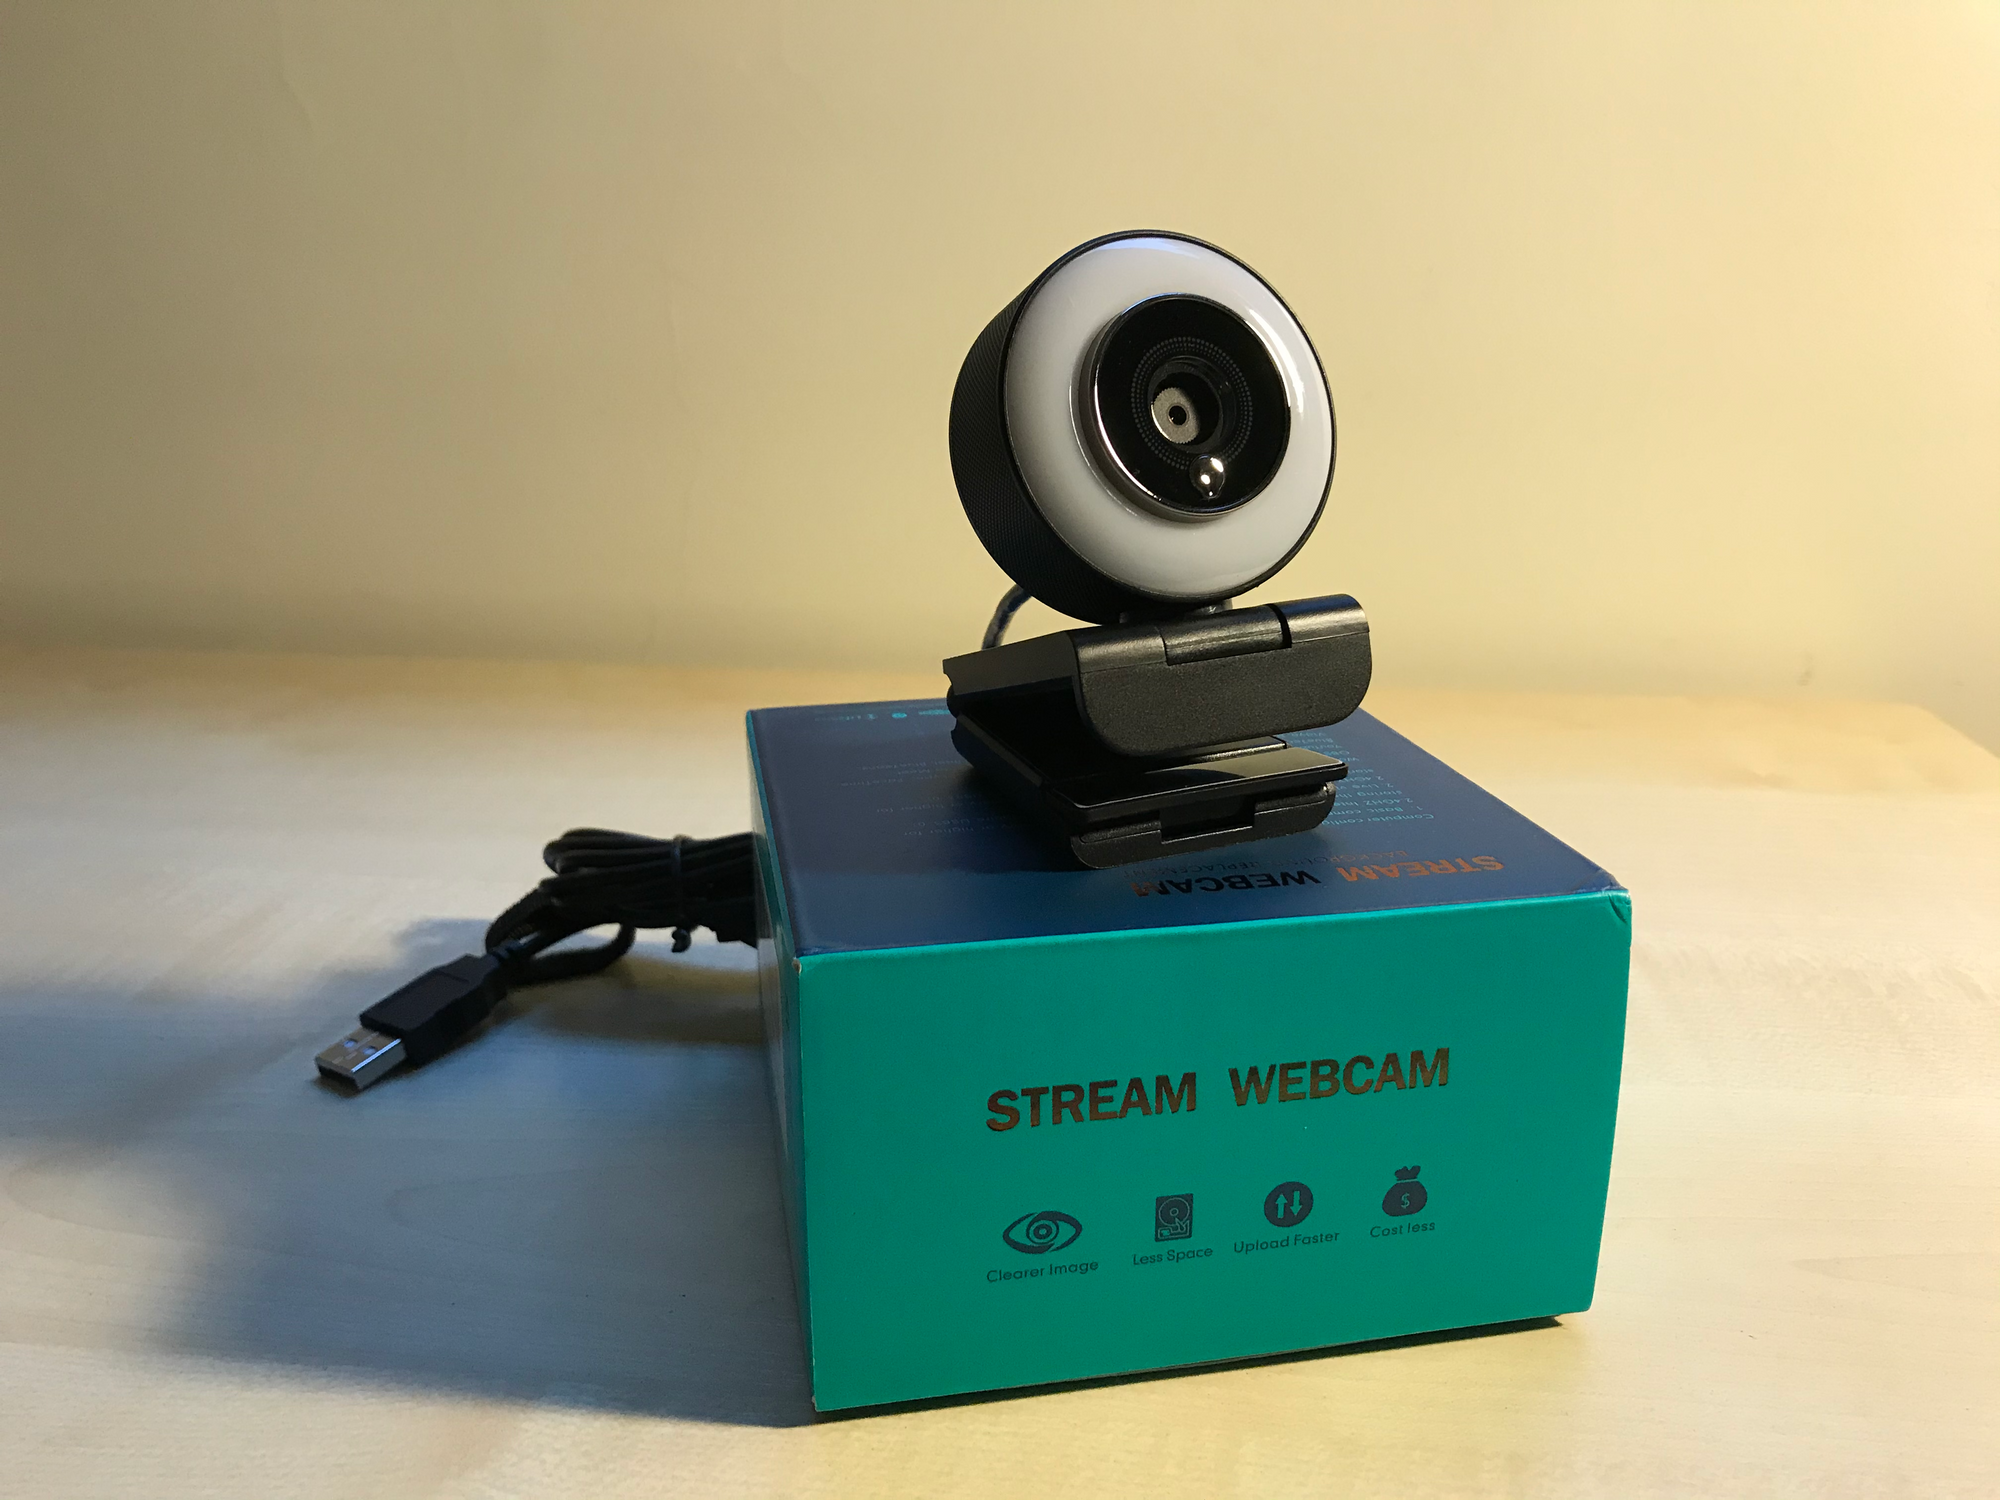 Vitade 960A Webcam Review - Budget 1080p with LED Lights